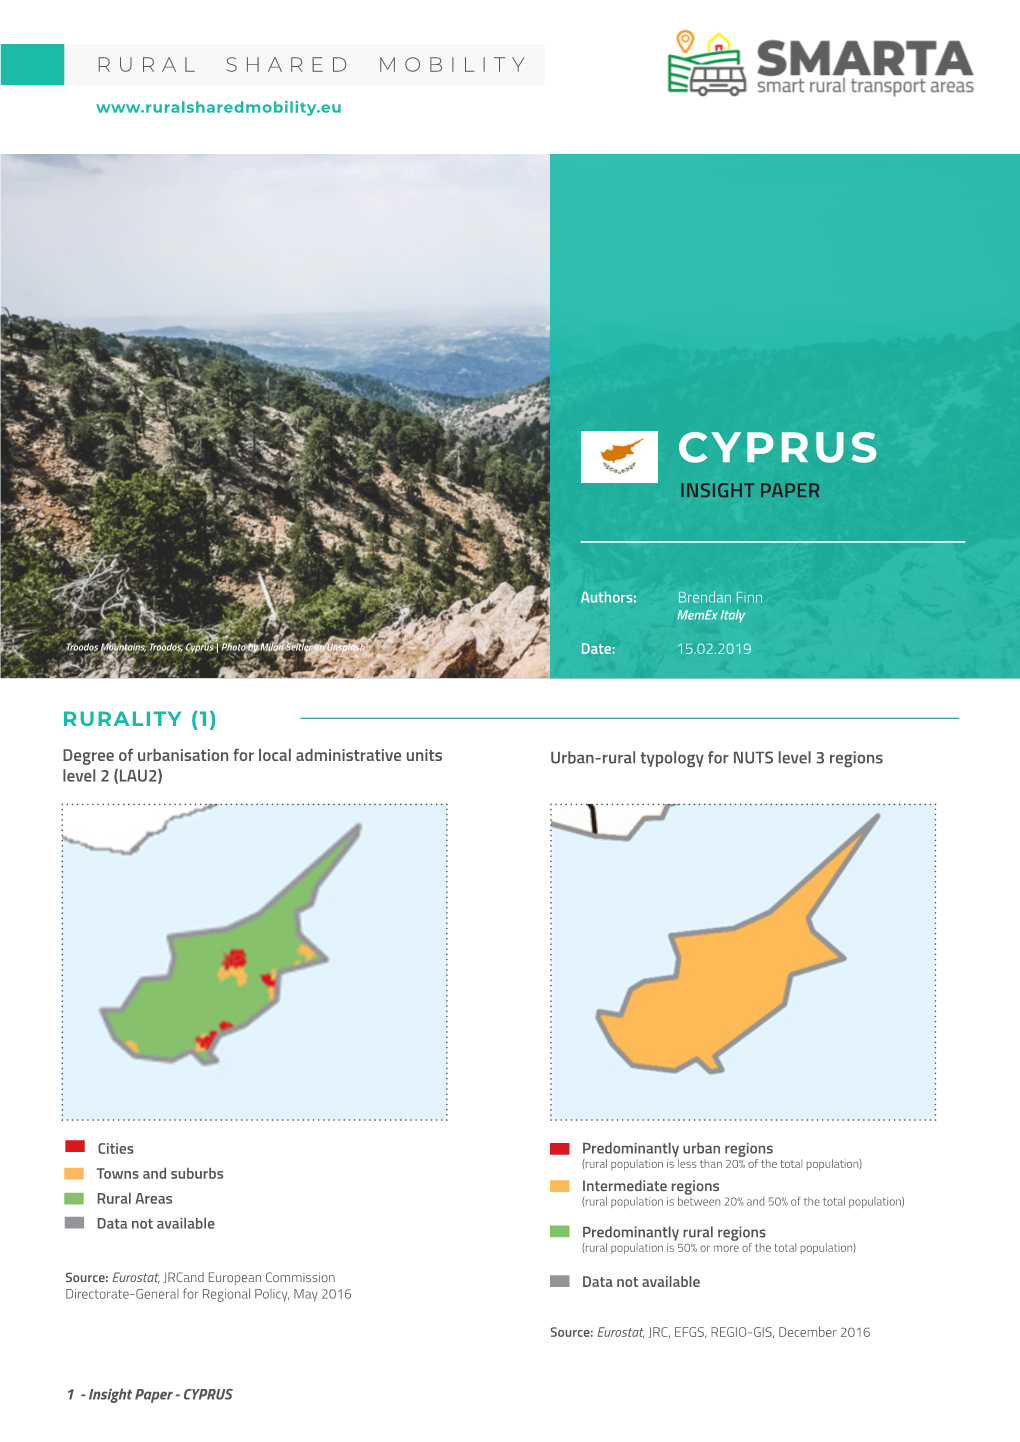 Cyprus Insight Paper